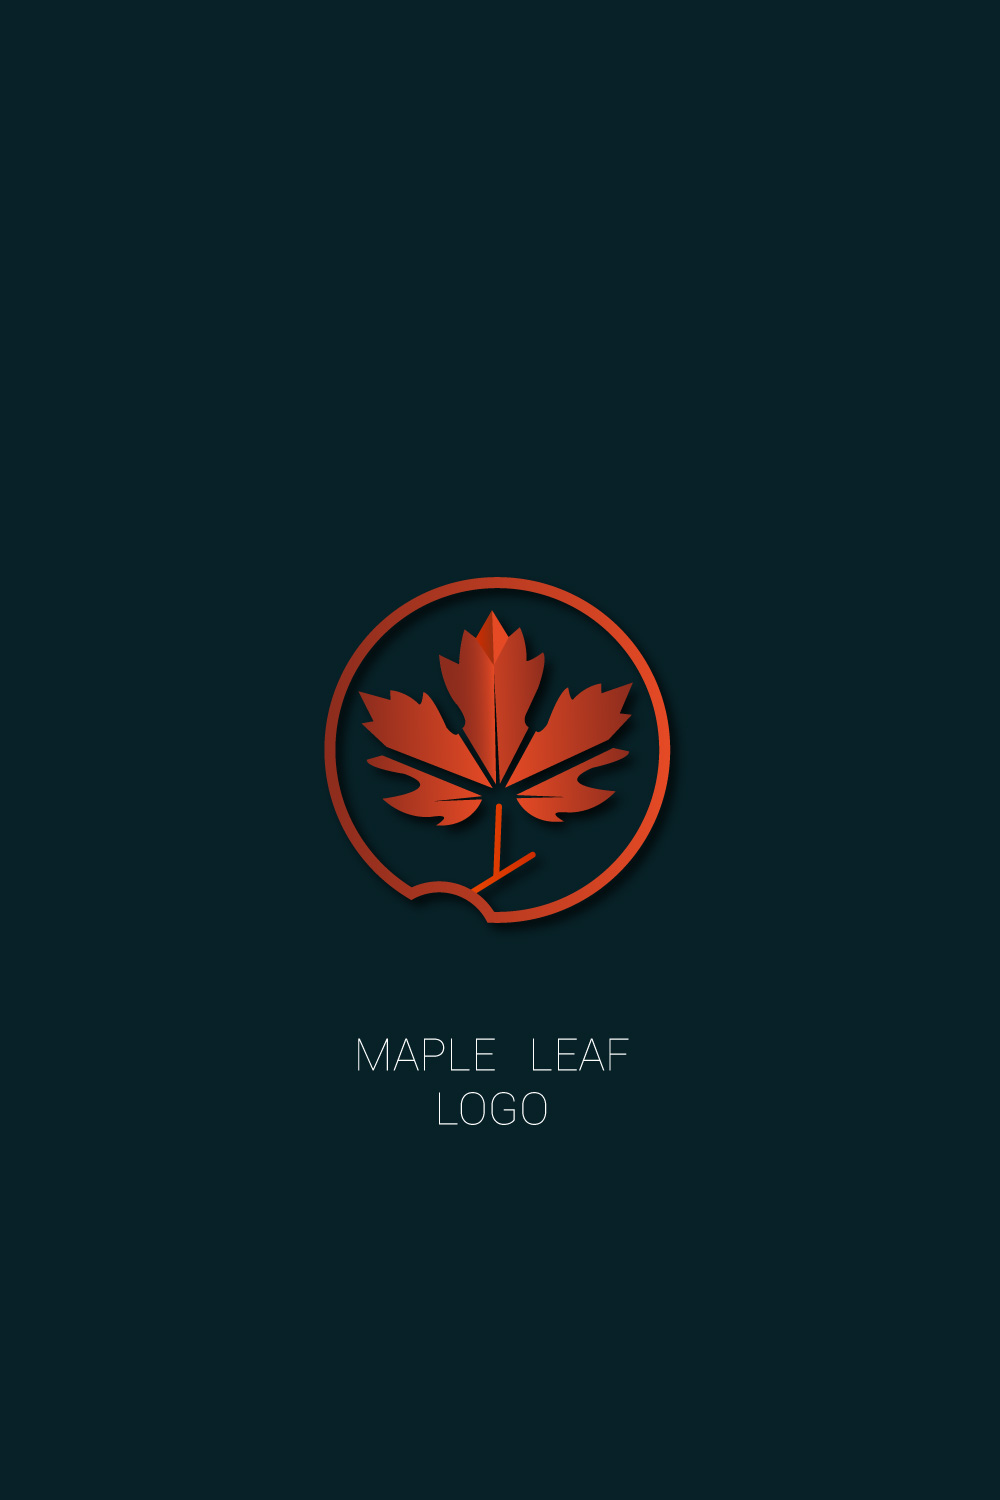 Maple leaf logo pinterest preview image.